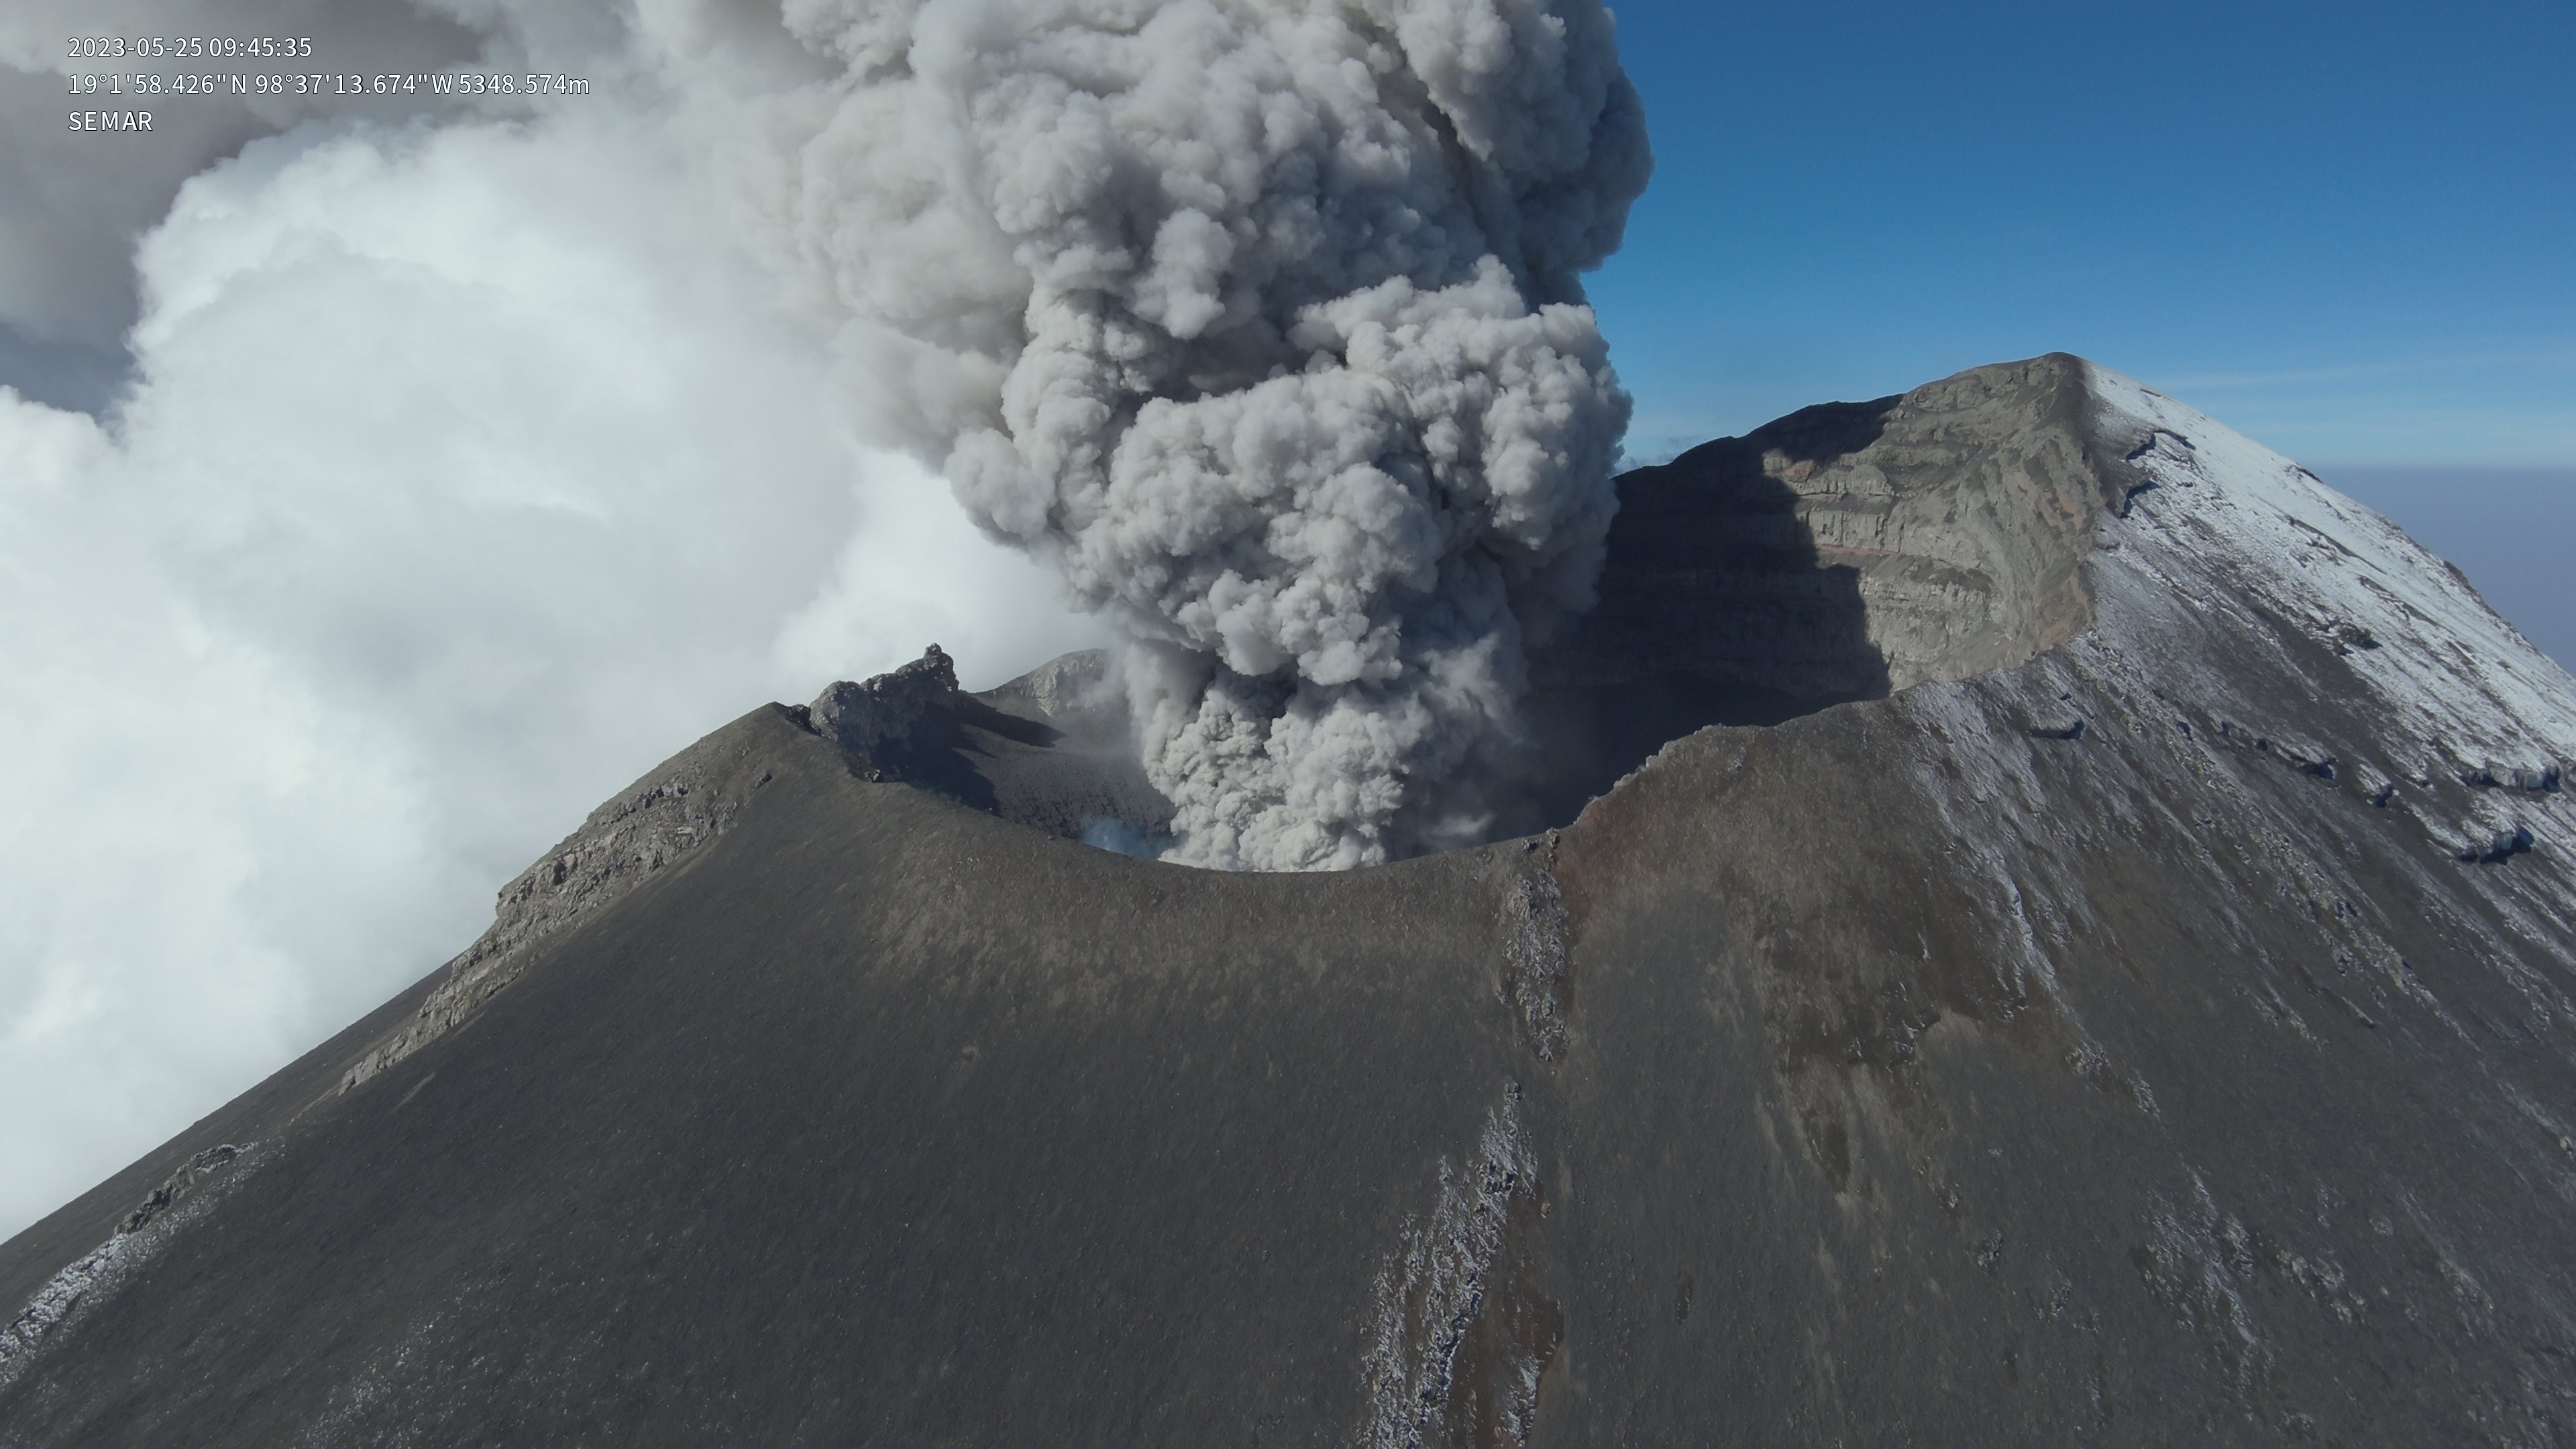 Volcán Popocatépetl hoy 29 de mayo: Se observa columna de gases y vapor de agua